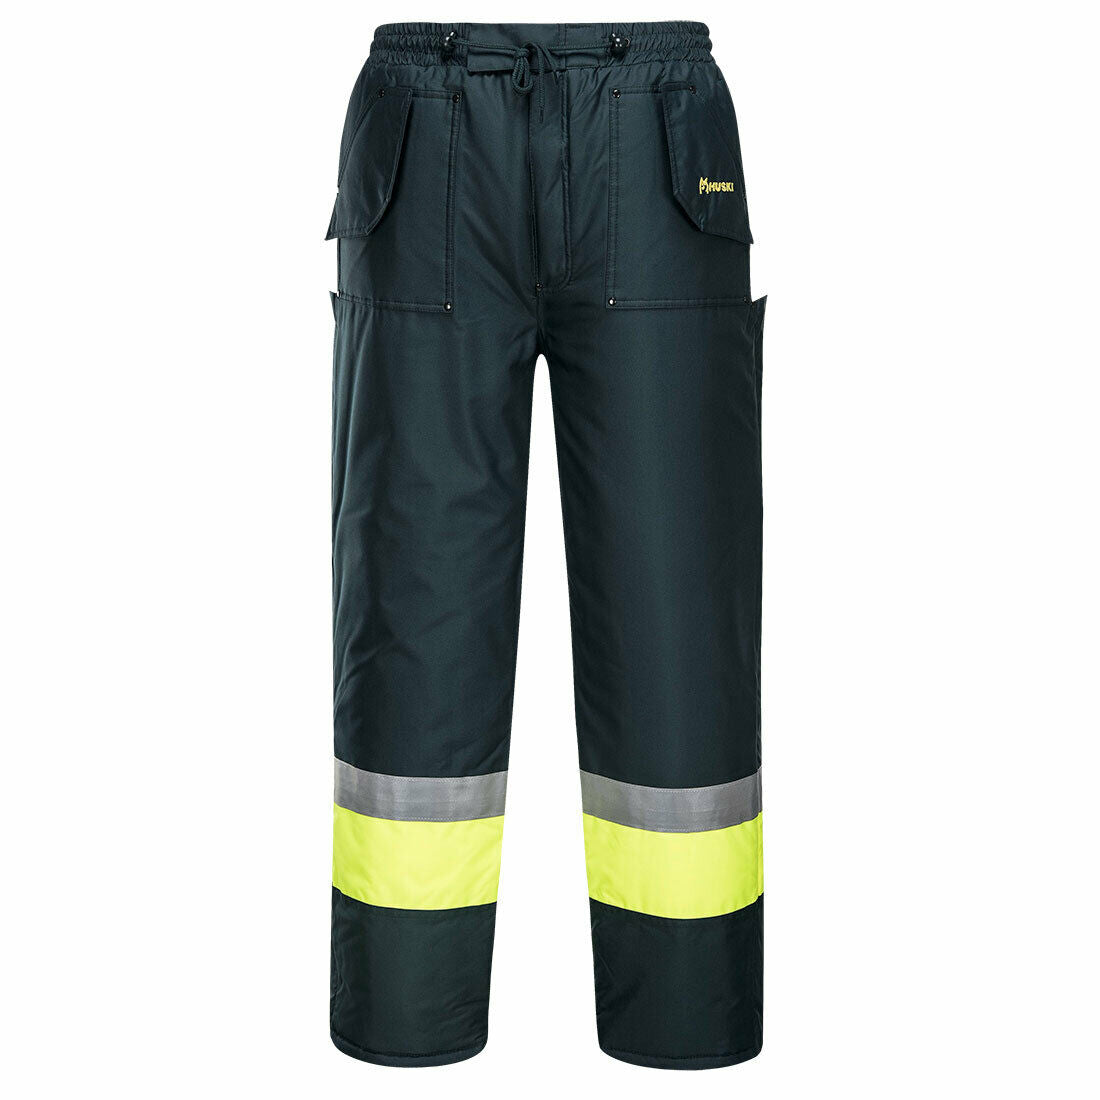 Portwest Mens Huski Freezer Pants Waterproof Reflective Taped Work Safety K8047-Collins Clothing Co